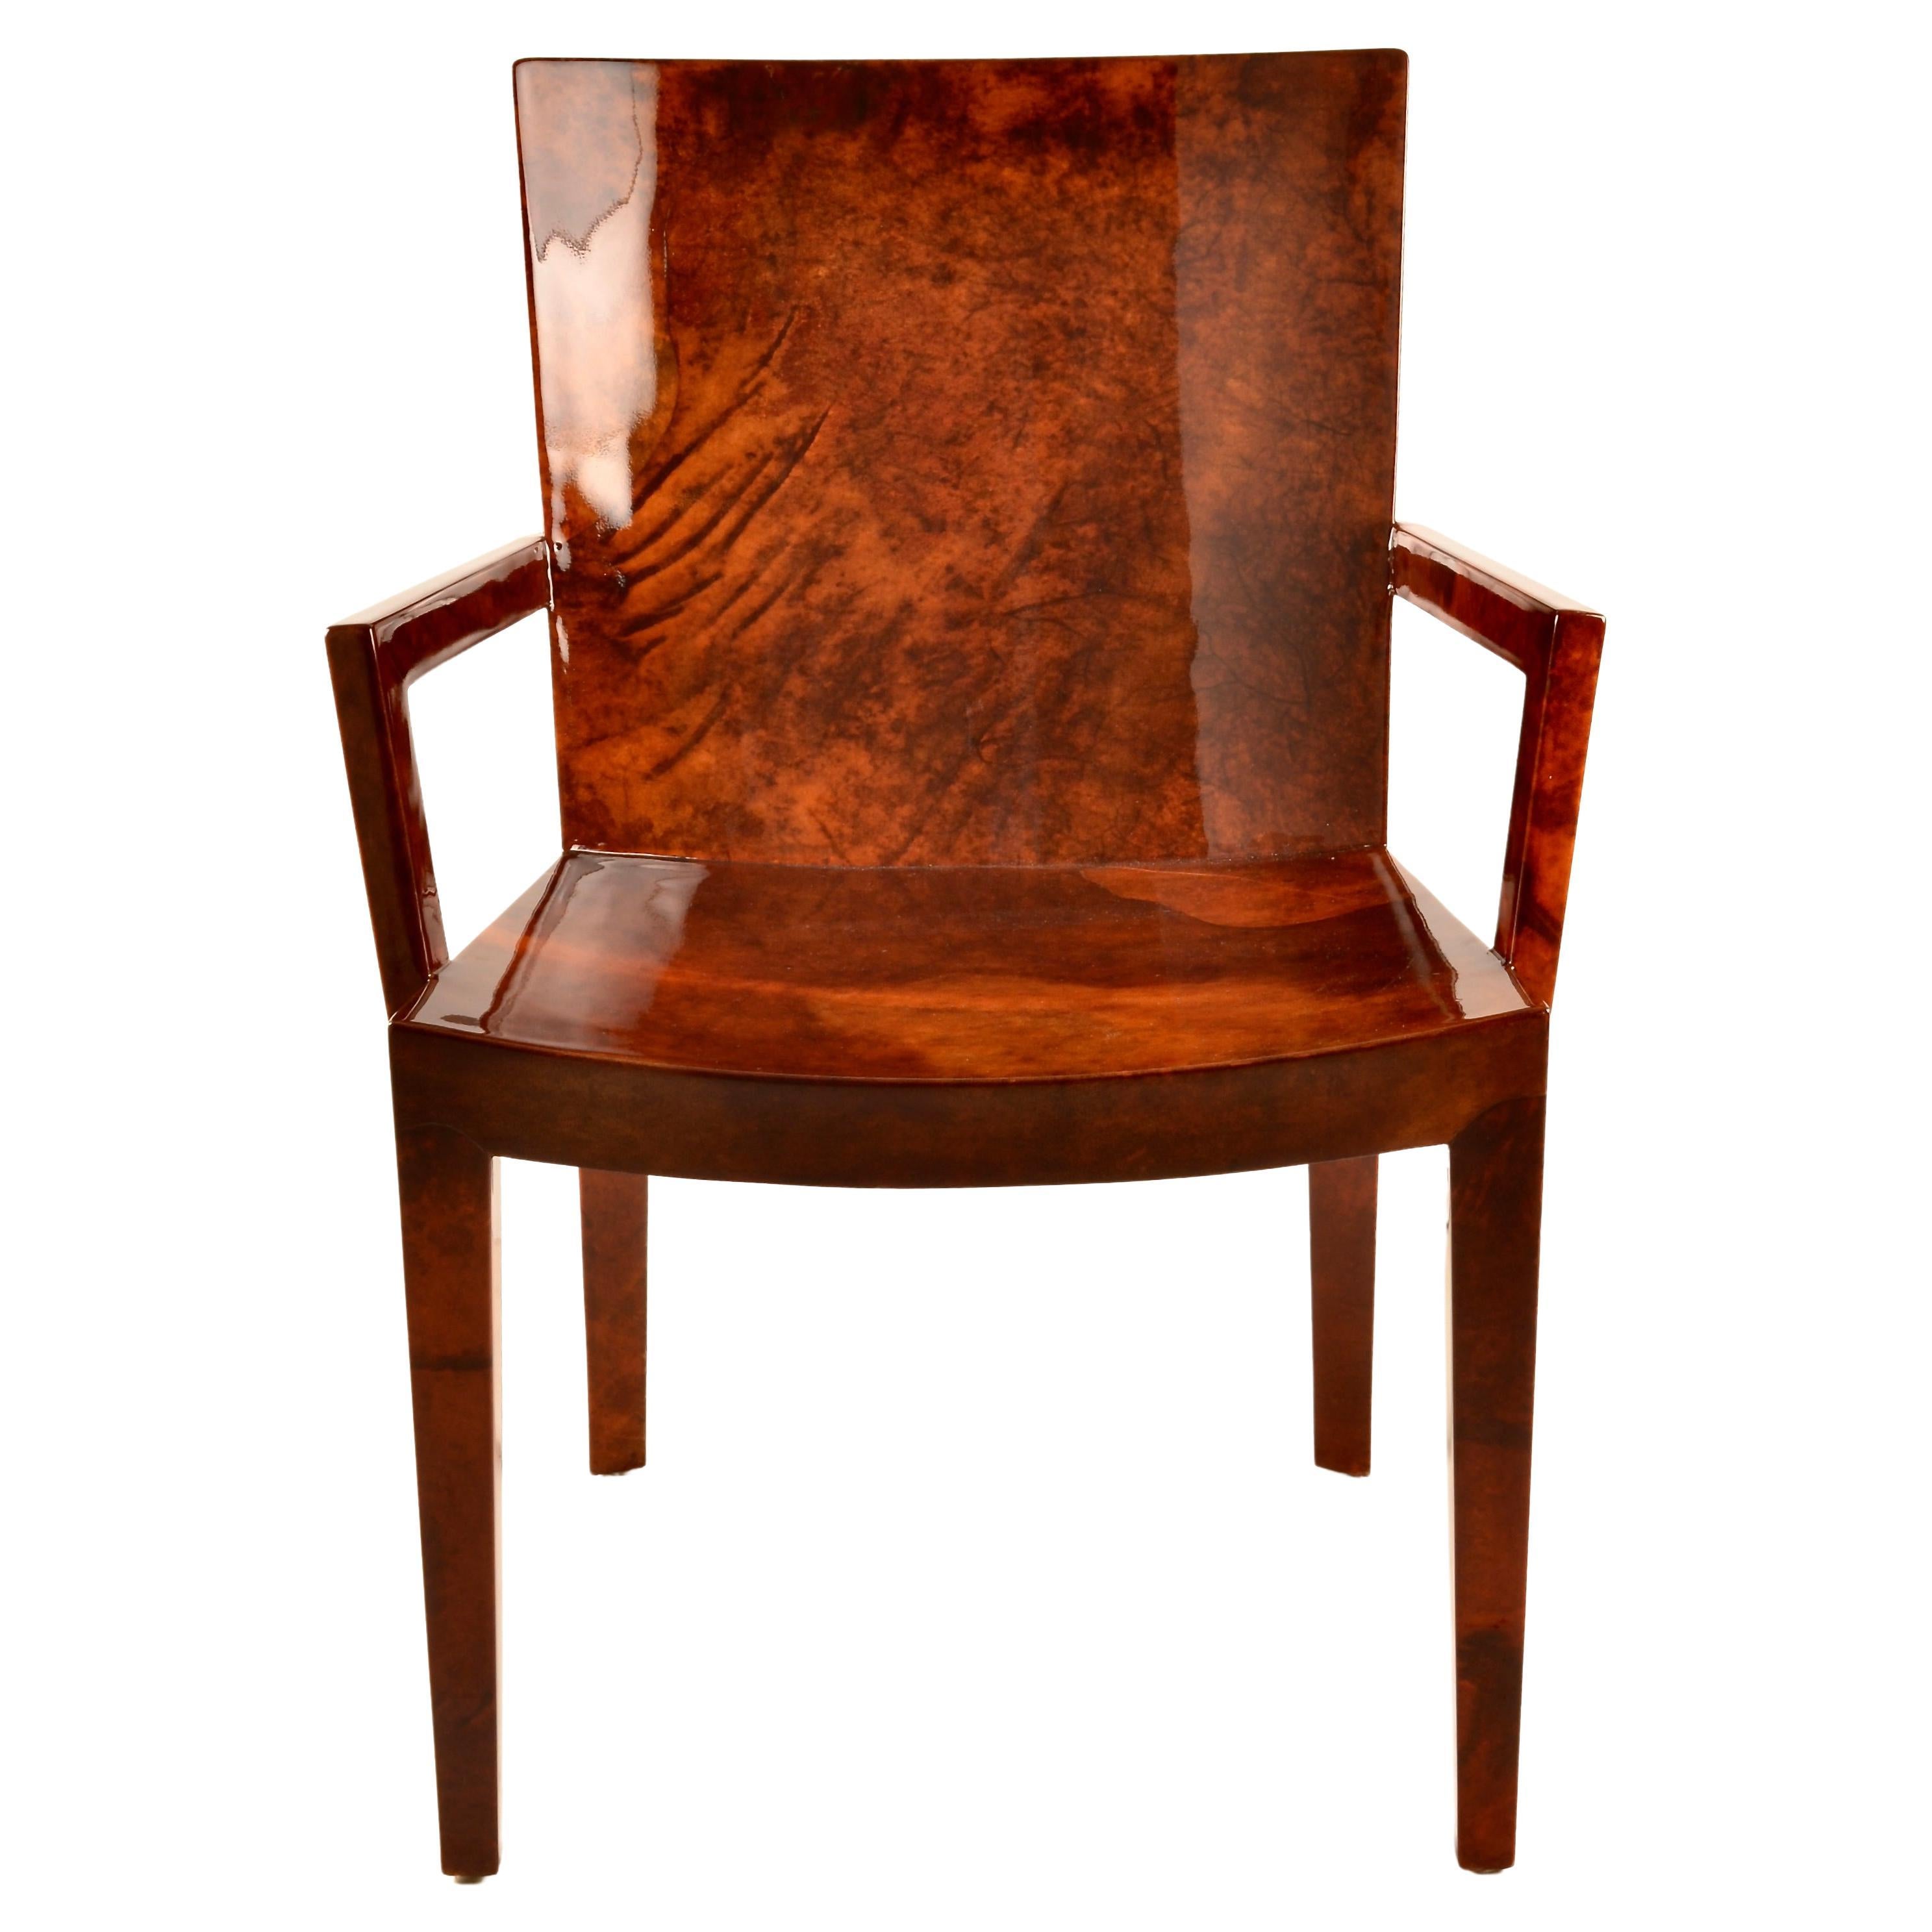 Karl Springer JMF Arm Chair in Lacquered Goat Skin For Sale